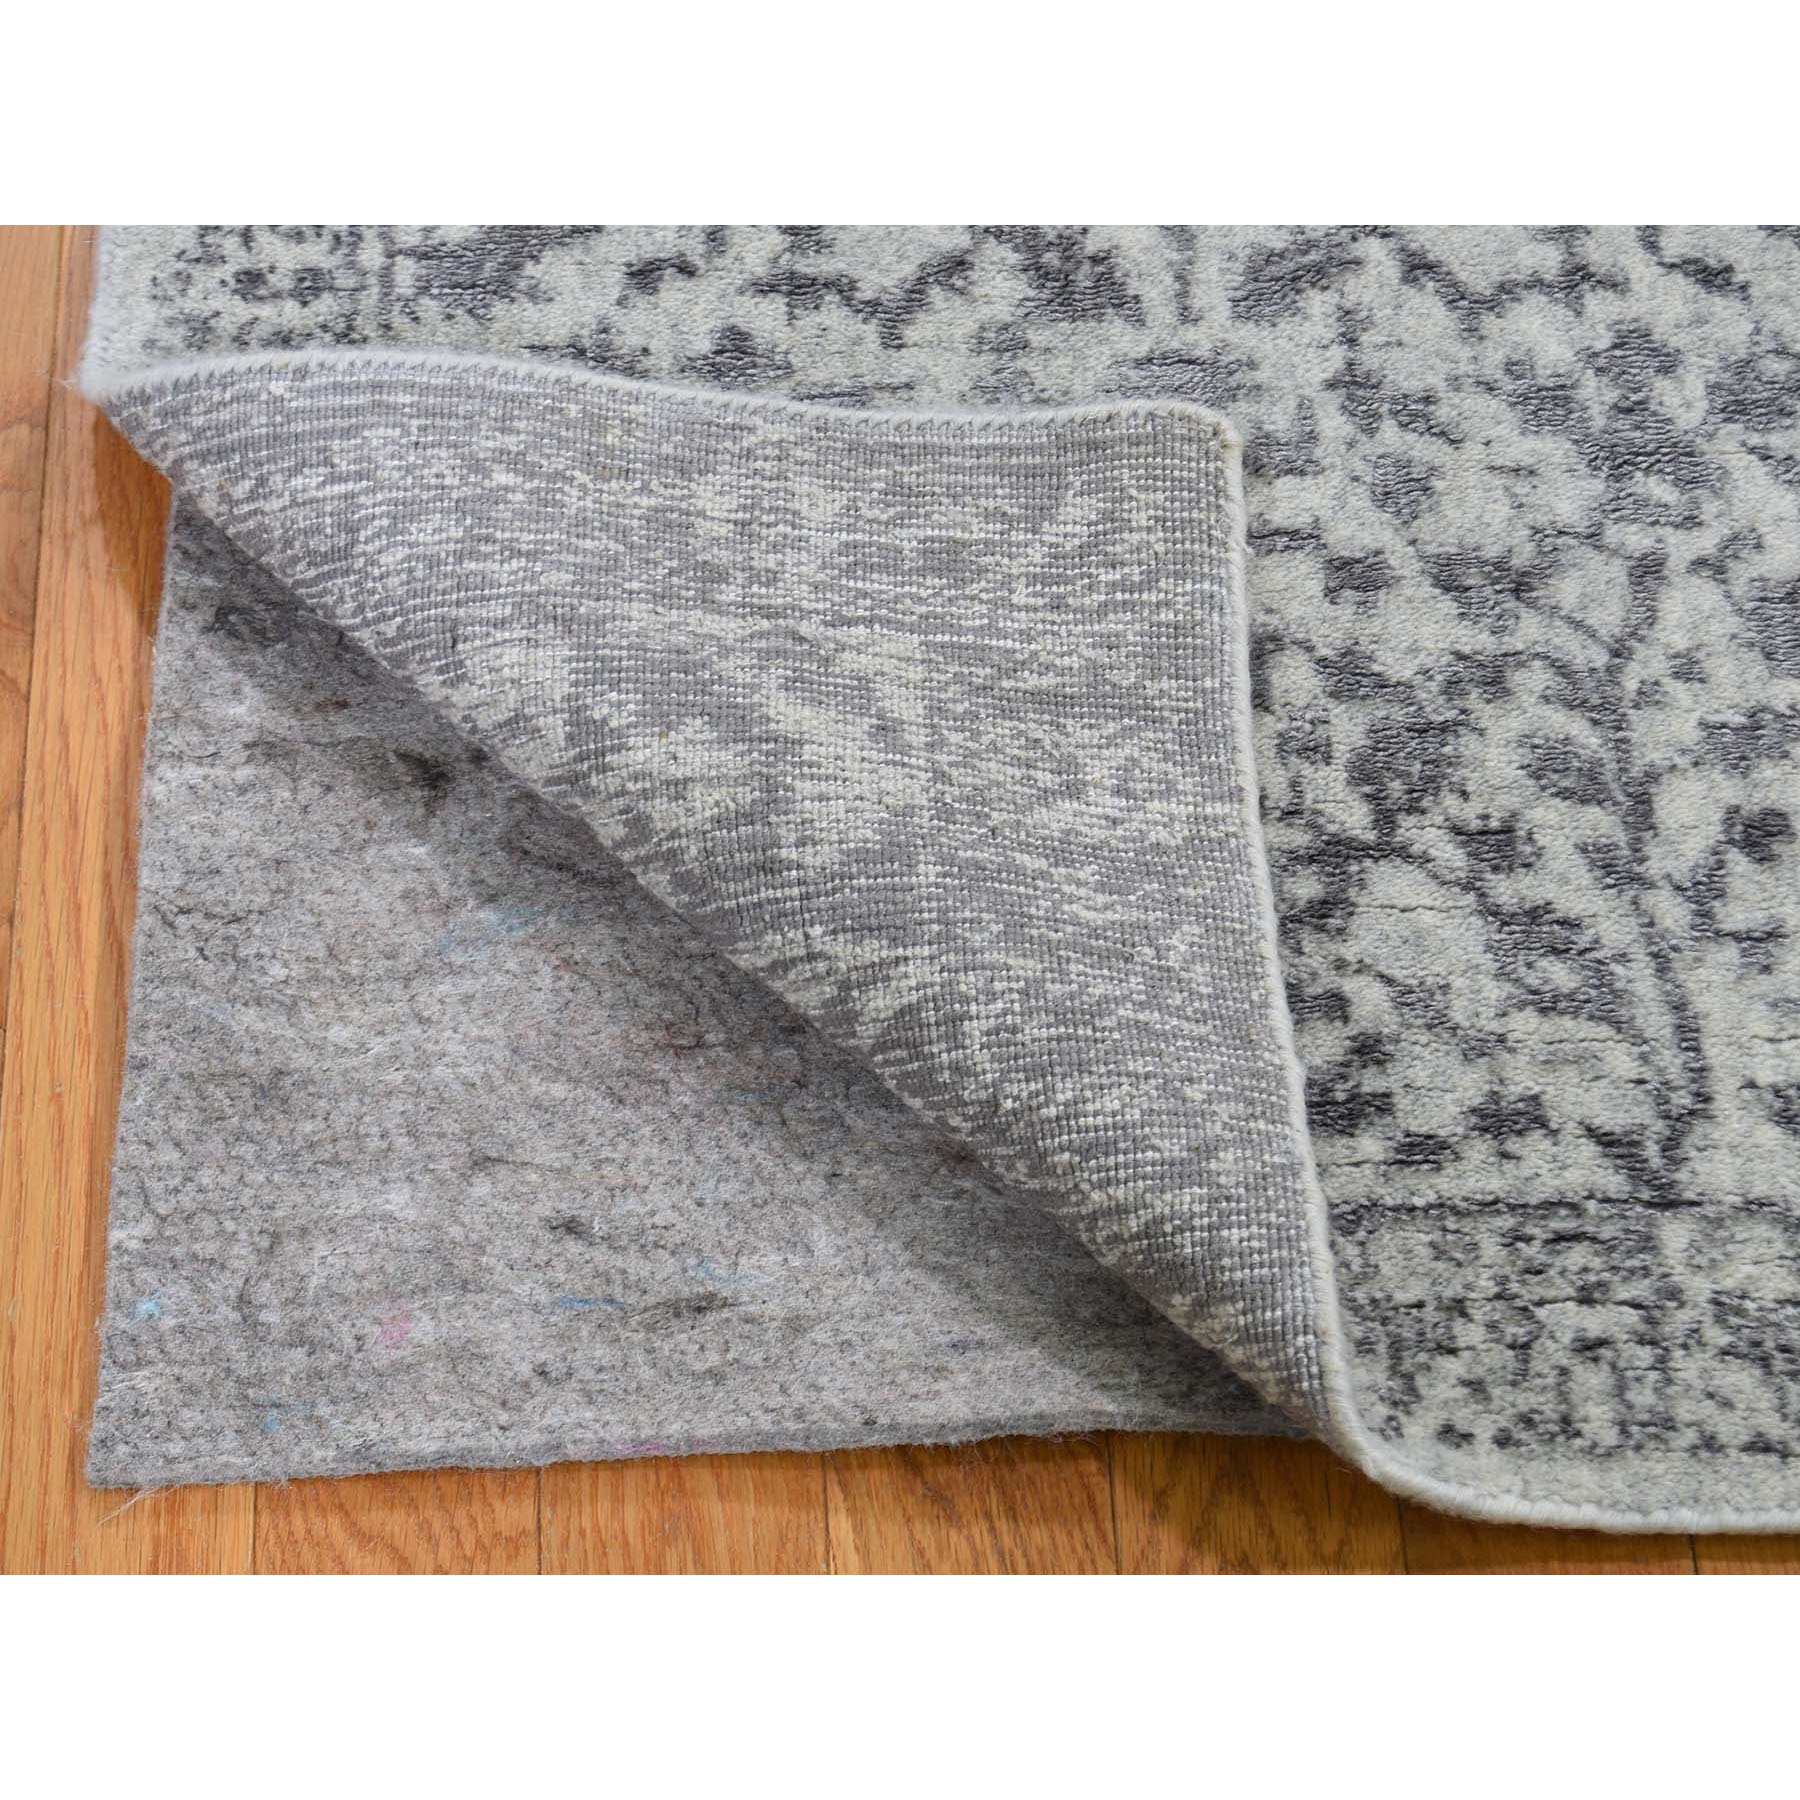 2-5 x8-2  Jacquard Hand-Loomed Gray Broken Cypress Tree Design Silken Thick And Plush Runner Oriental Rug 